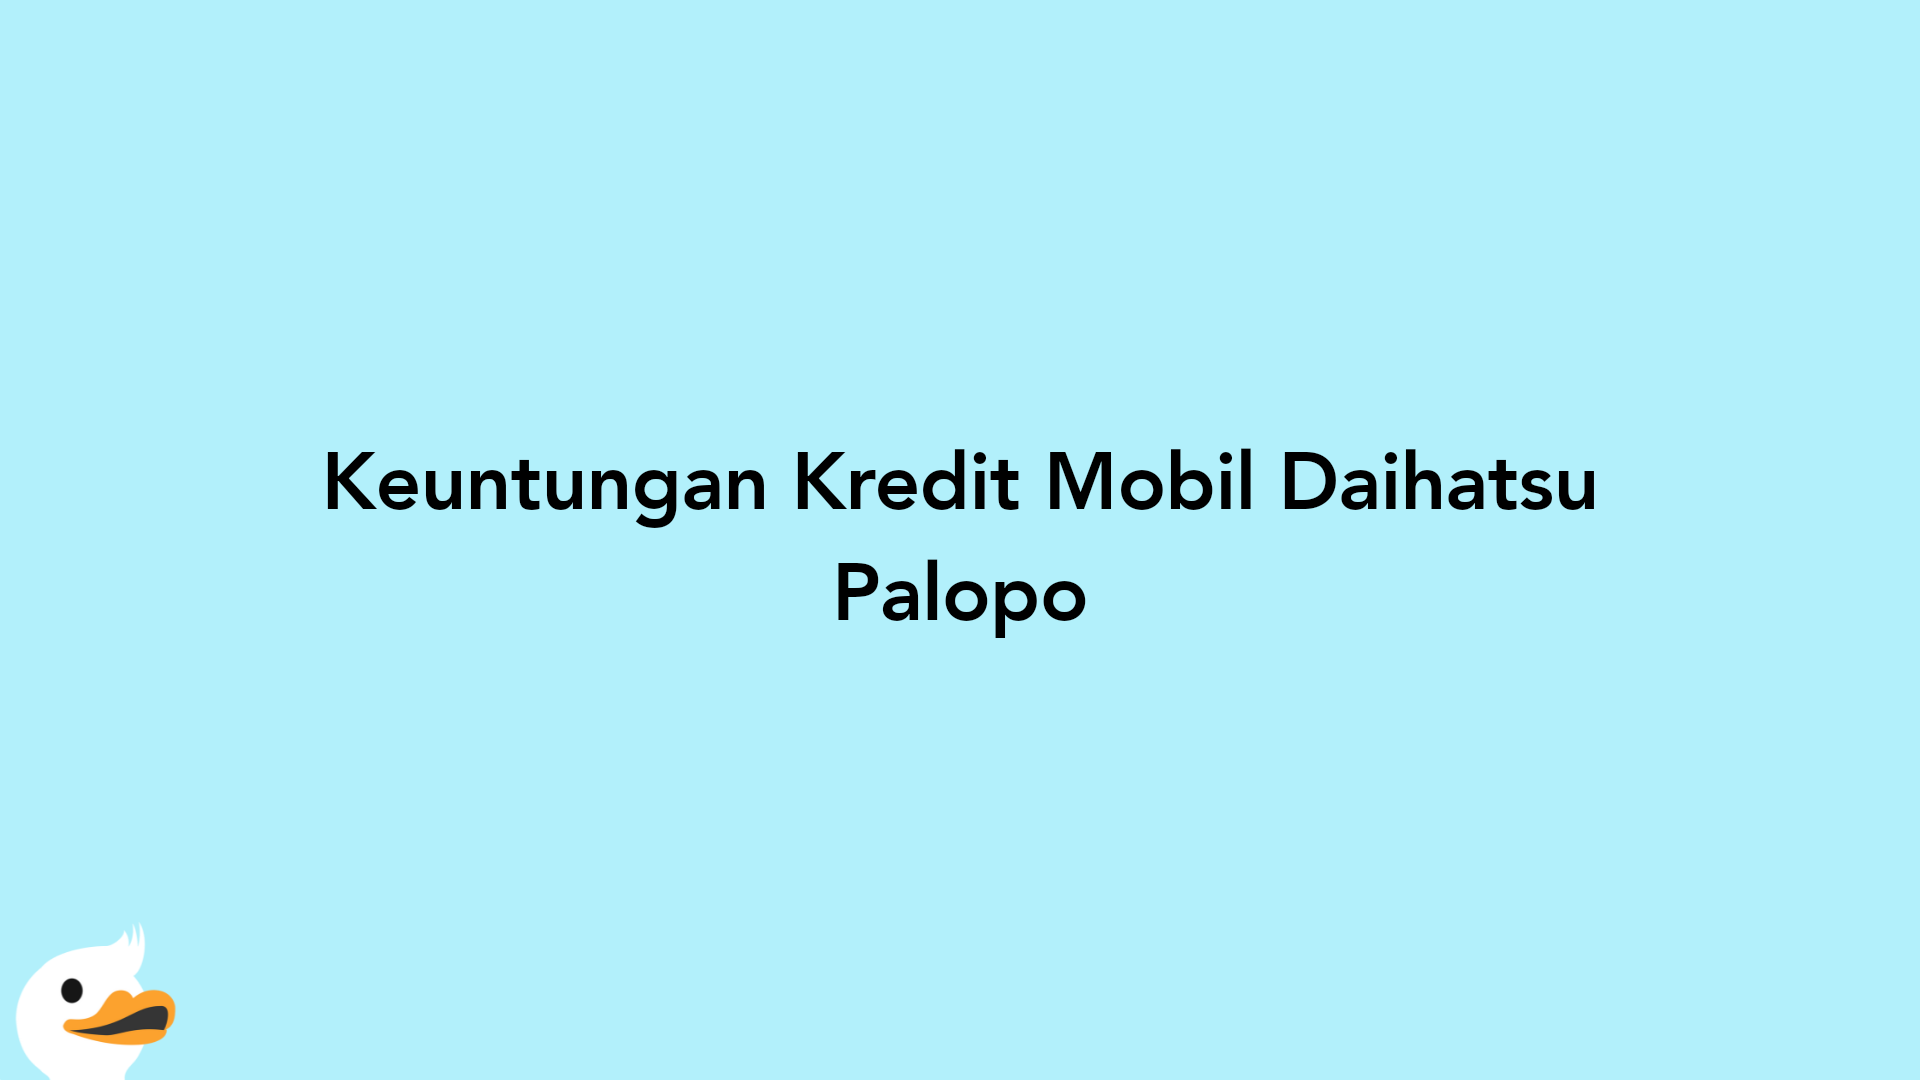 Keuntungan Kredit Mobil Daihatsu Palopo